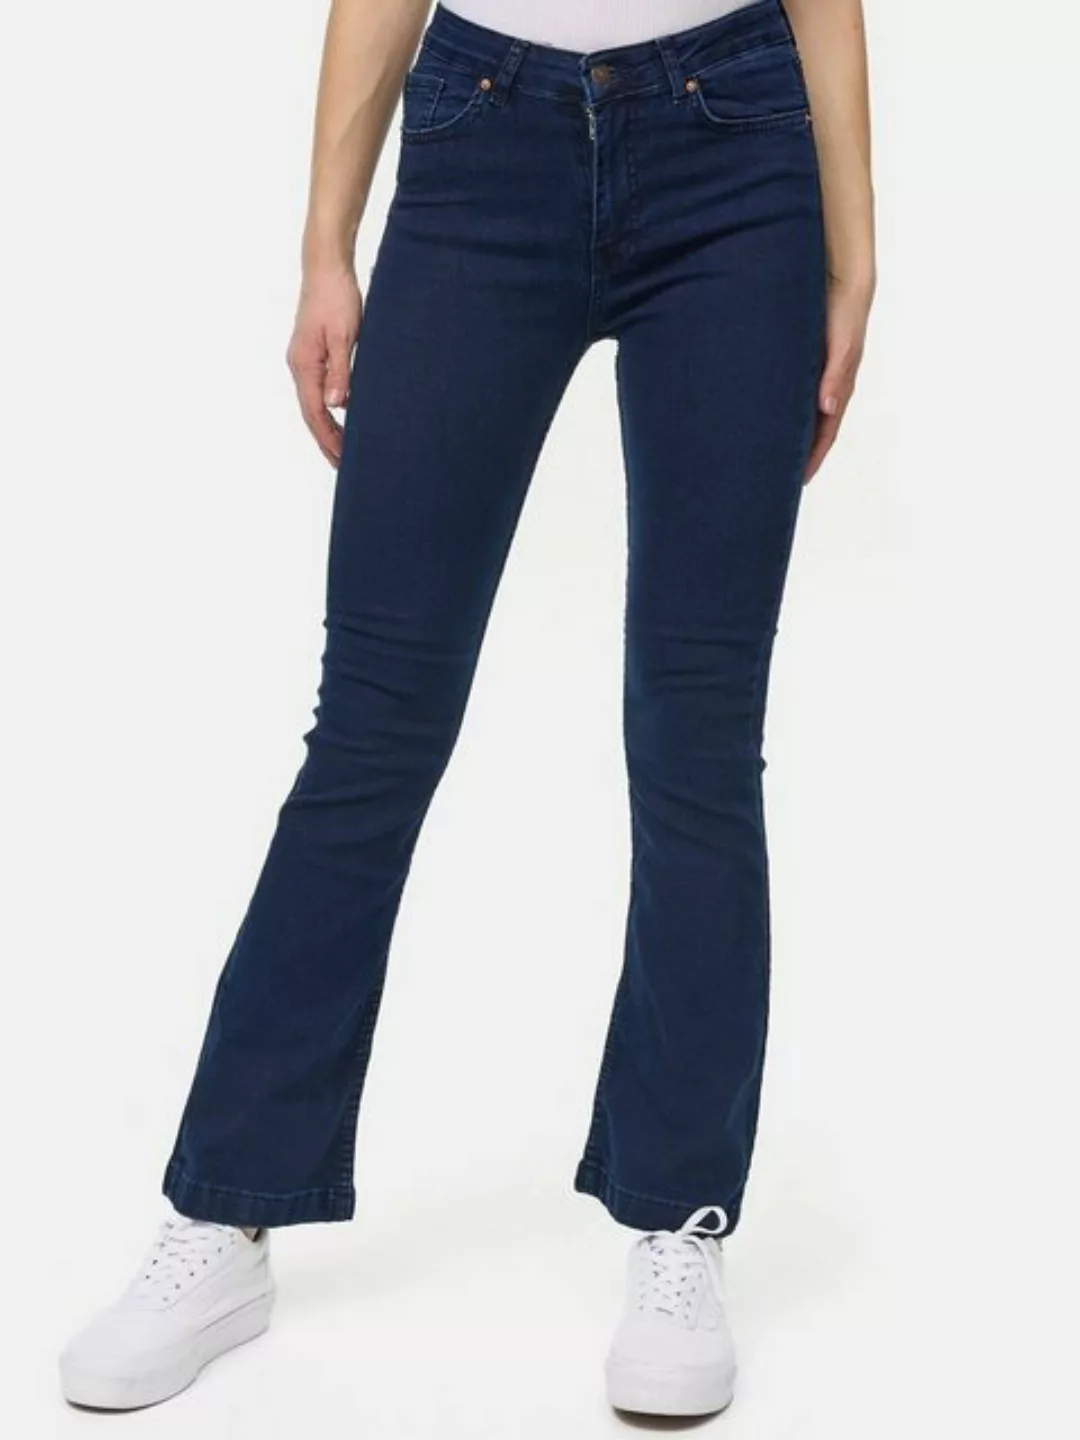 Tazzio Bootcut-Jeans F122 Damen Jeans Hose Jeanshose günstig online kaufen